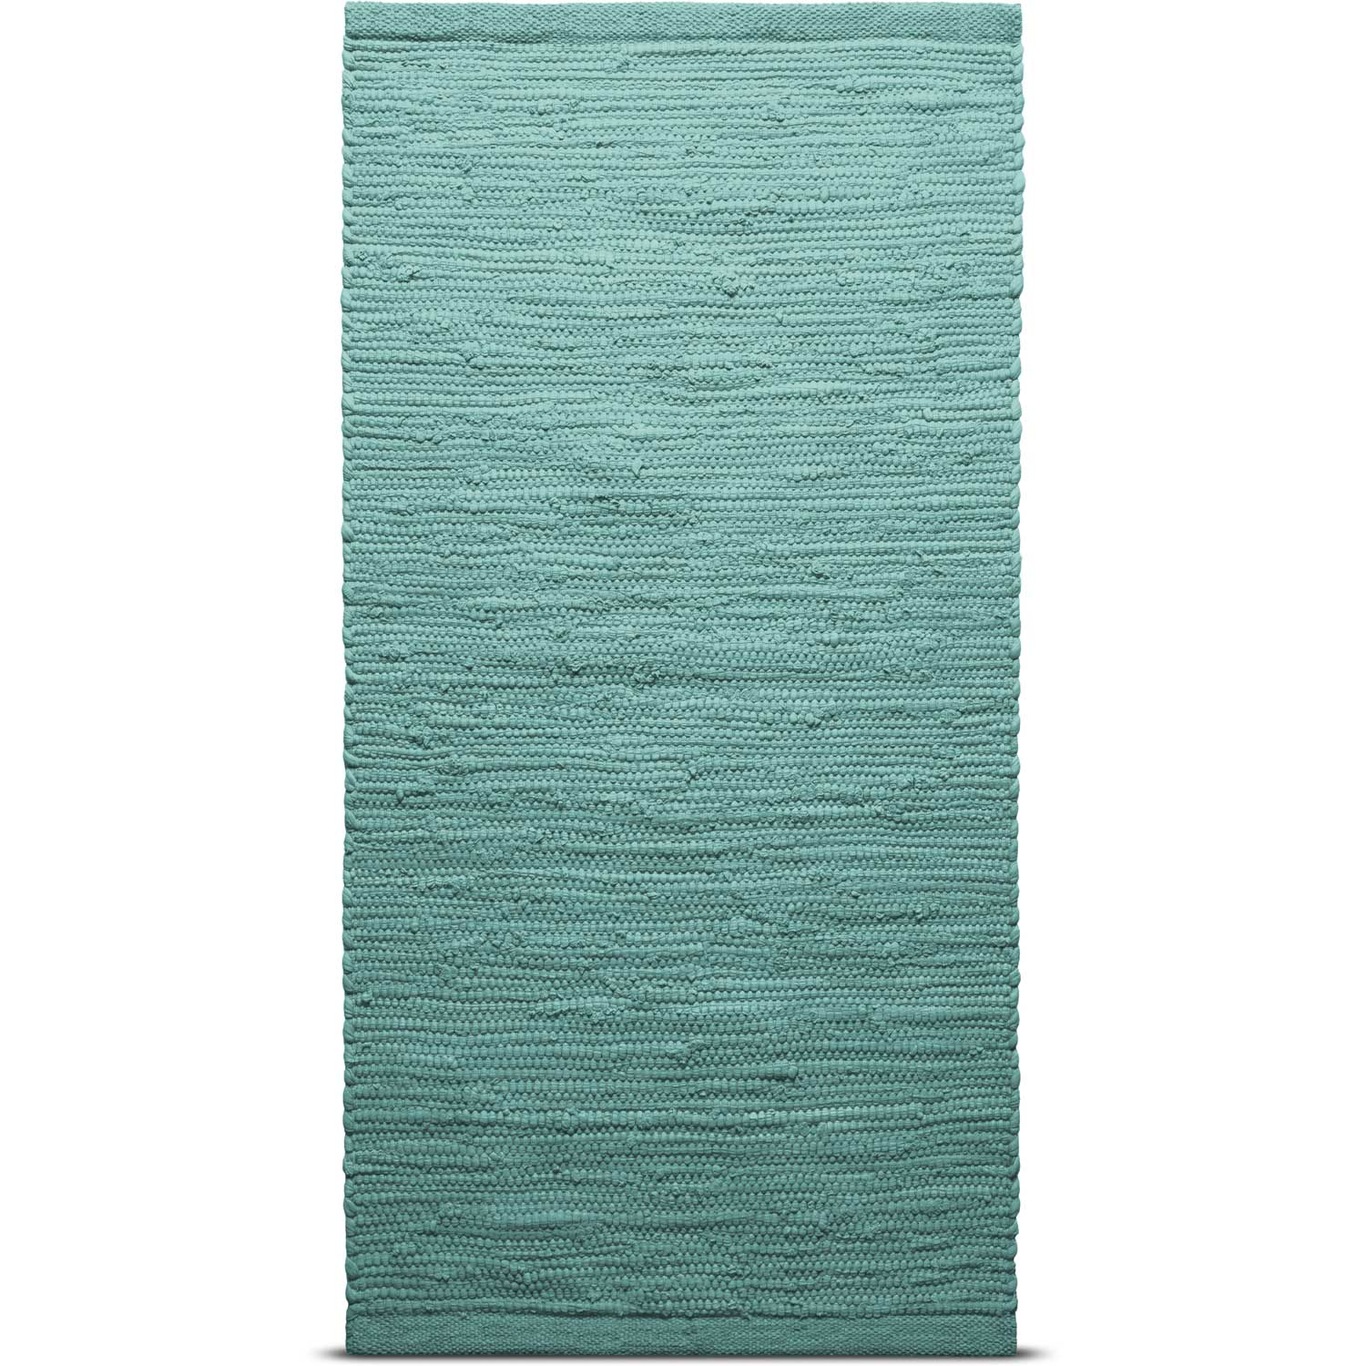 Cotton Matto Dusty Jade, 170x240 cm